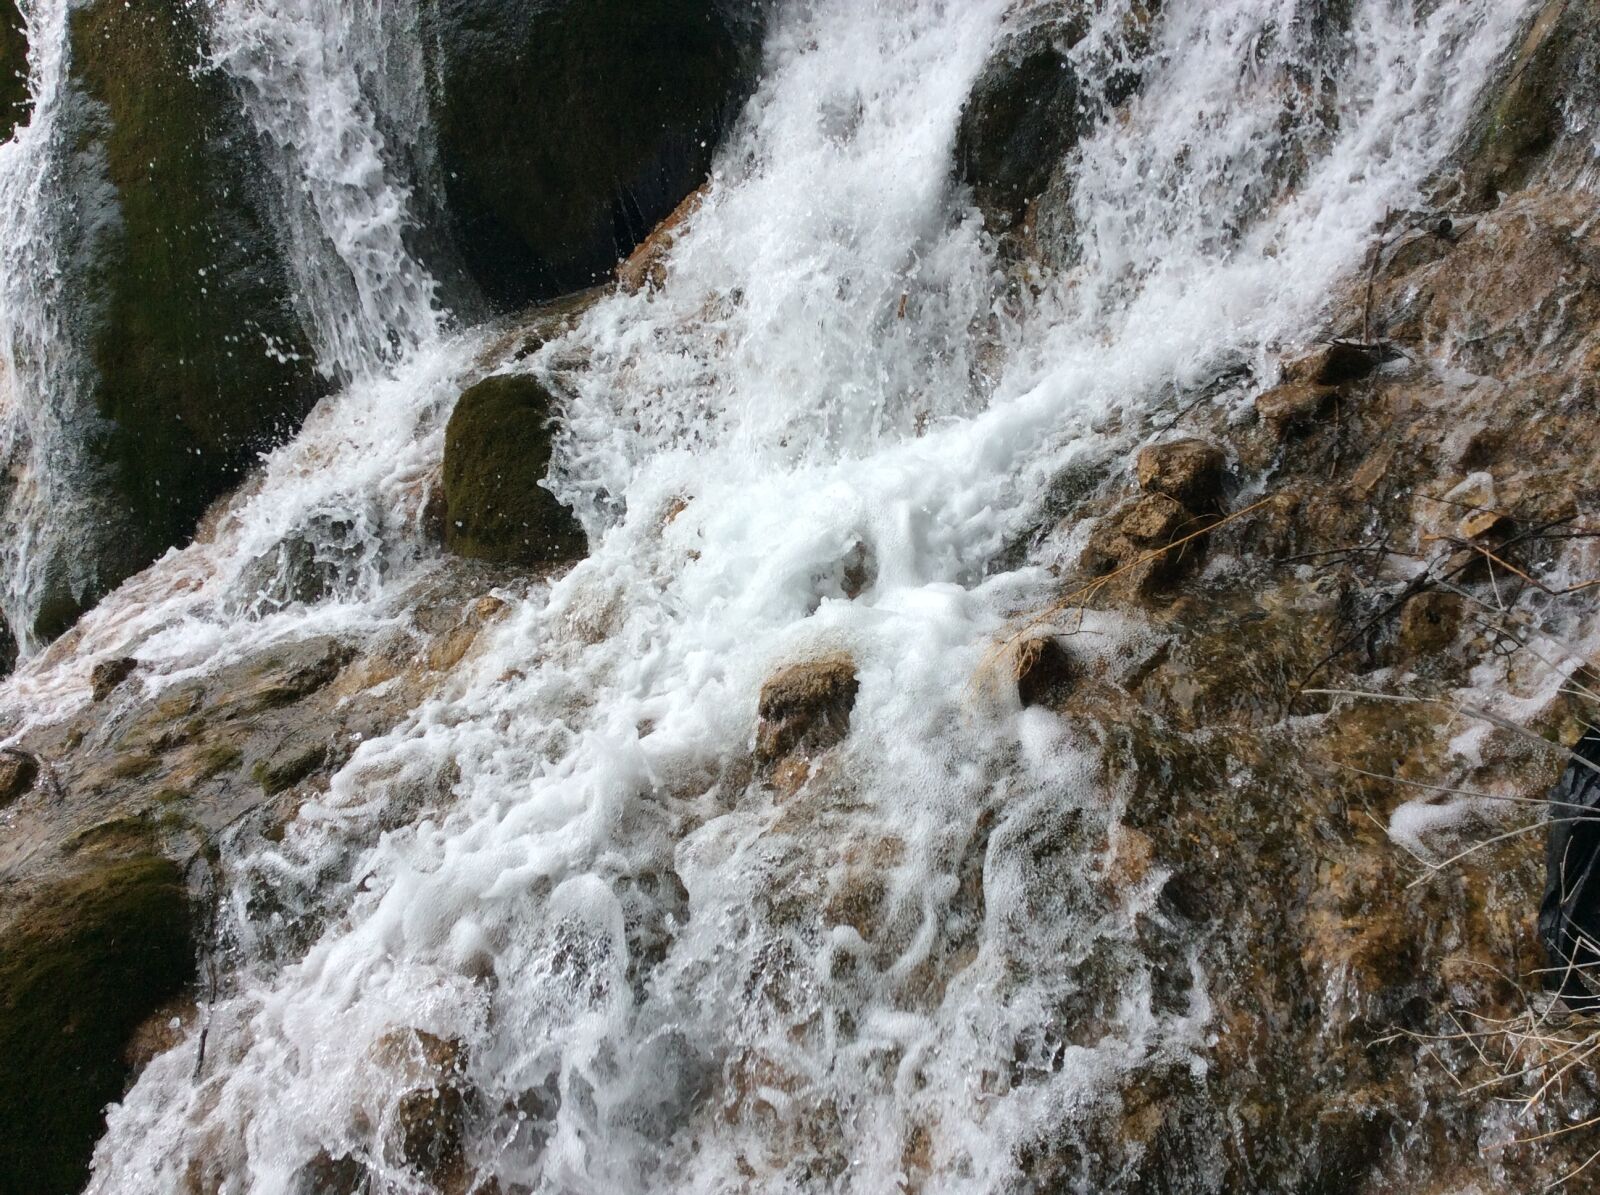 iPad mini 2 back camera 3.3mm f/2.4 sample photo. Spray, falls, water features photography